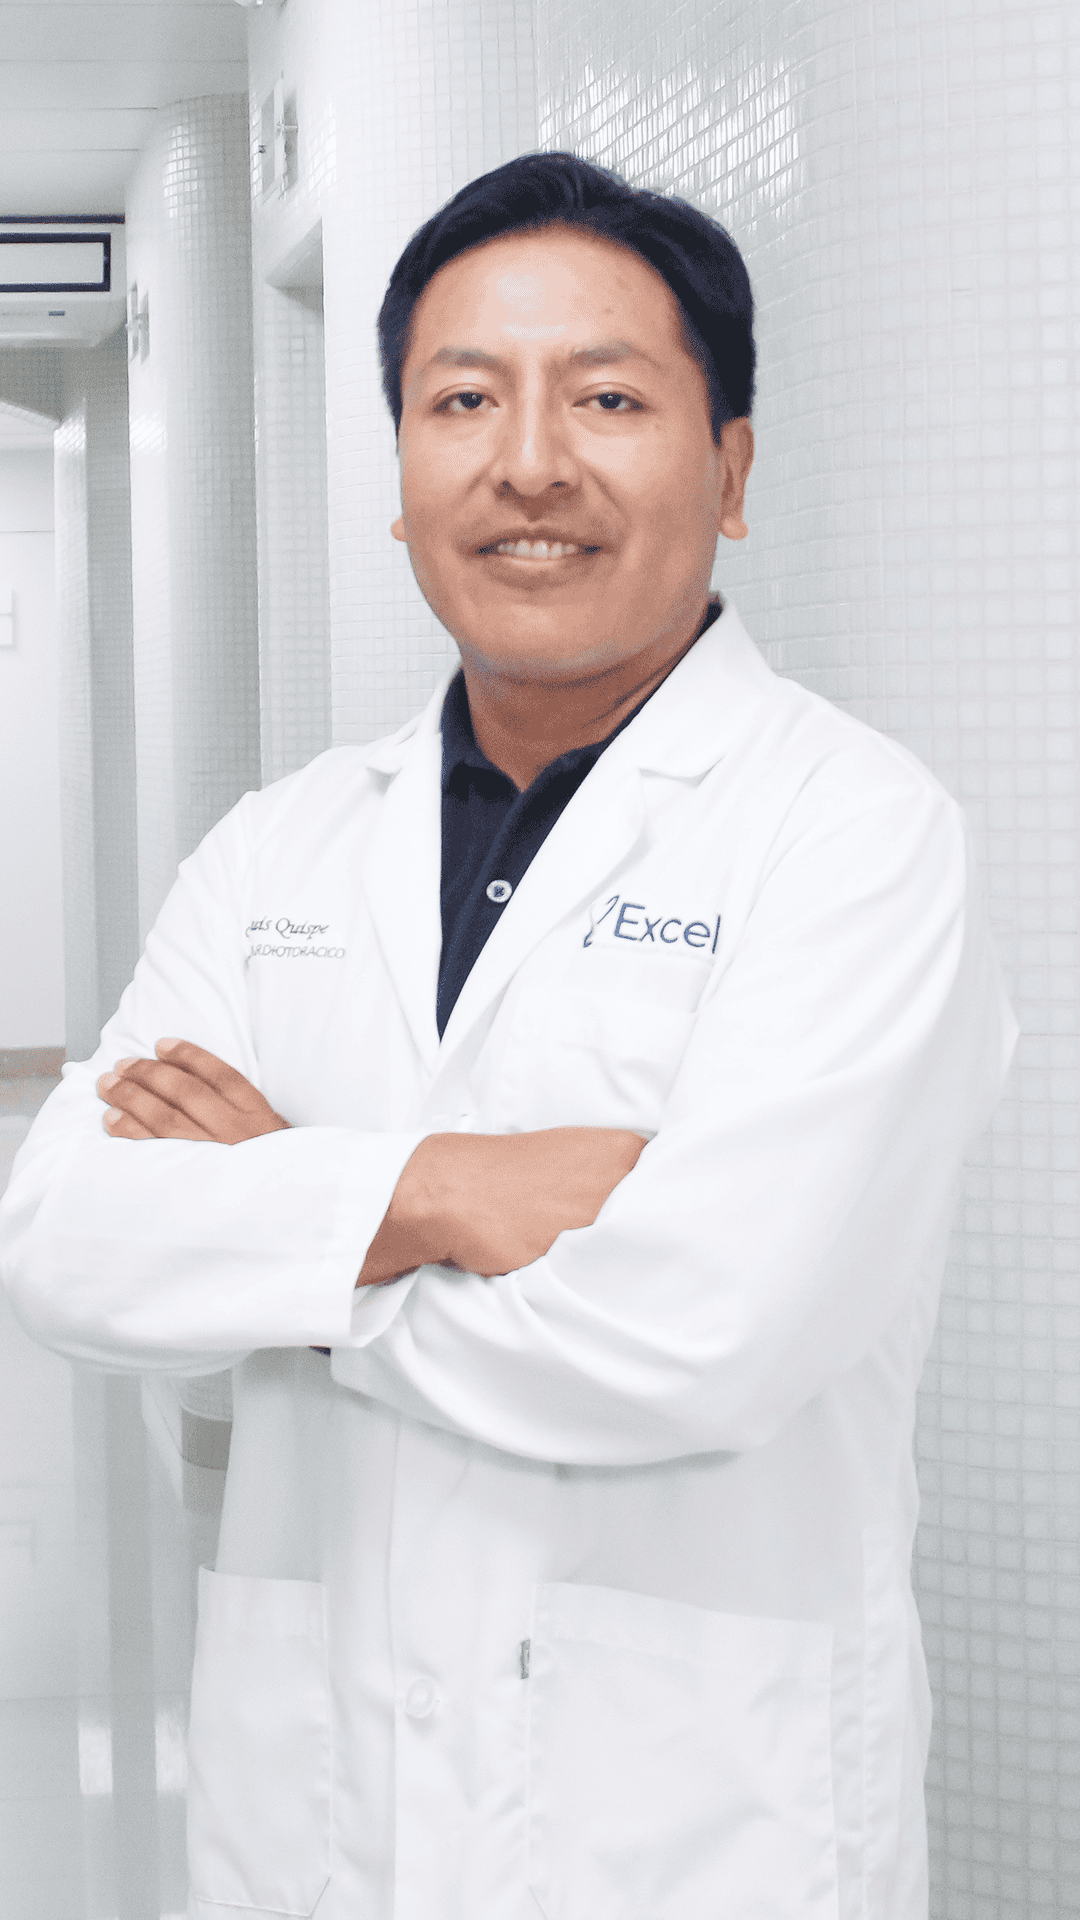 Dr Luis Q